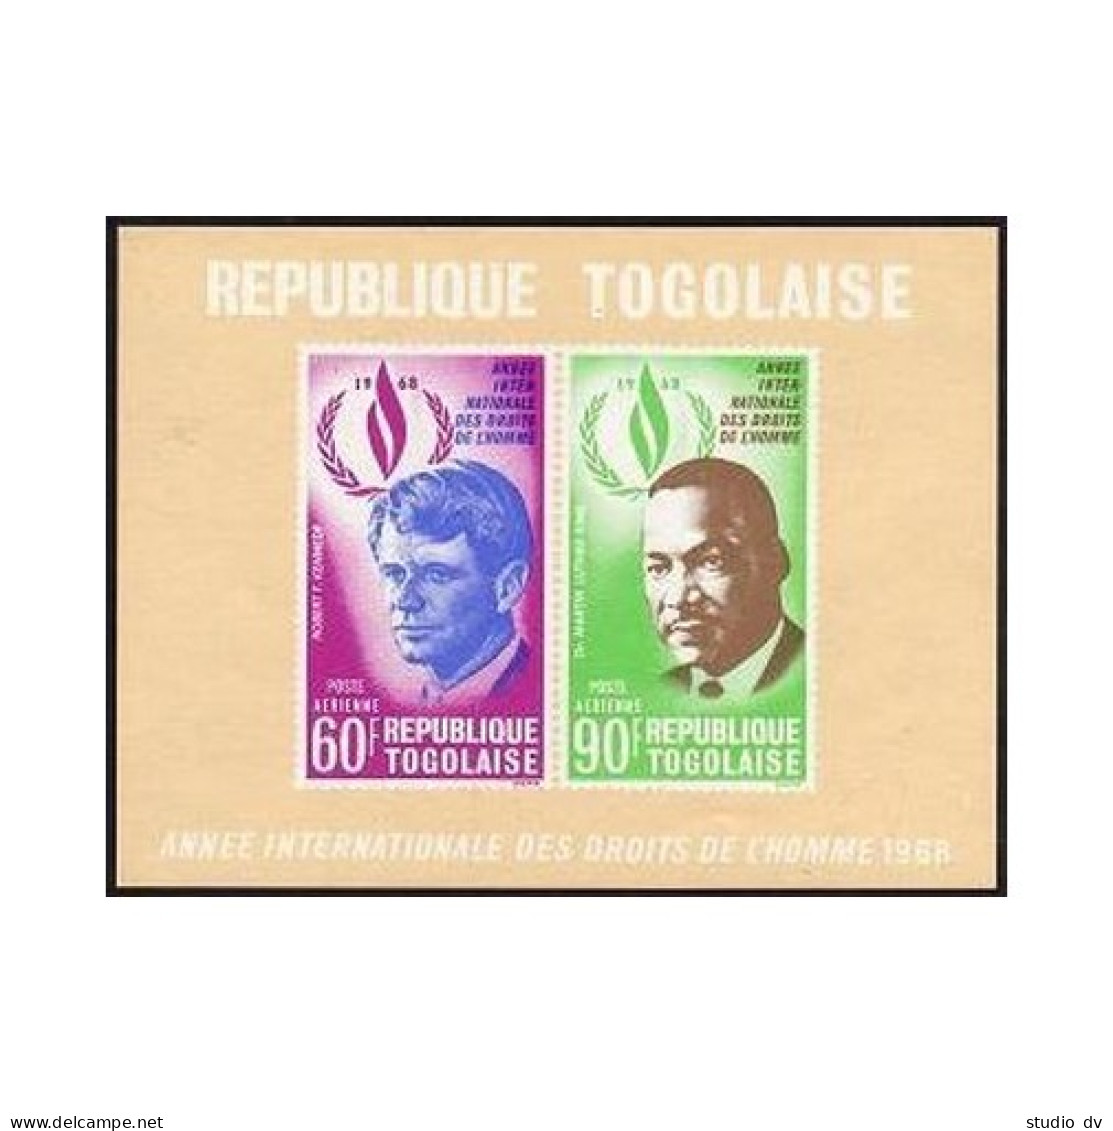 Togo 665-668,C102-C103, C103a, MNH. Mi 685-690, Bl.38. Human Rights Year-1969. - Togo (1960-...)